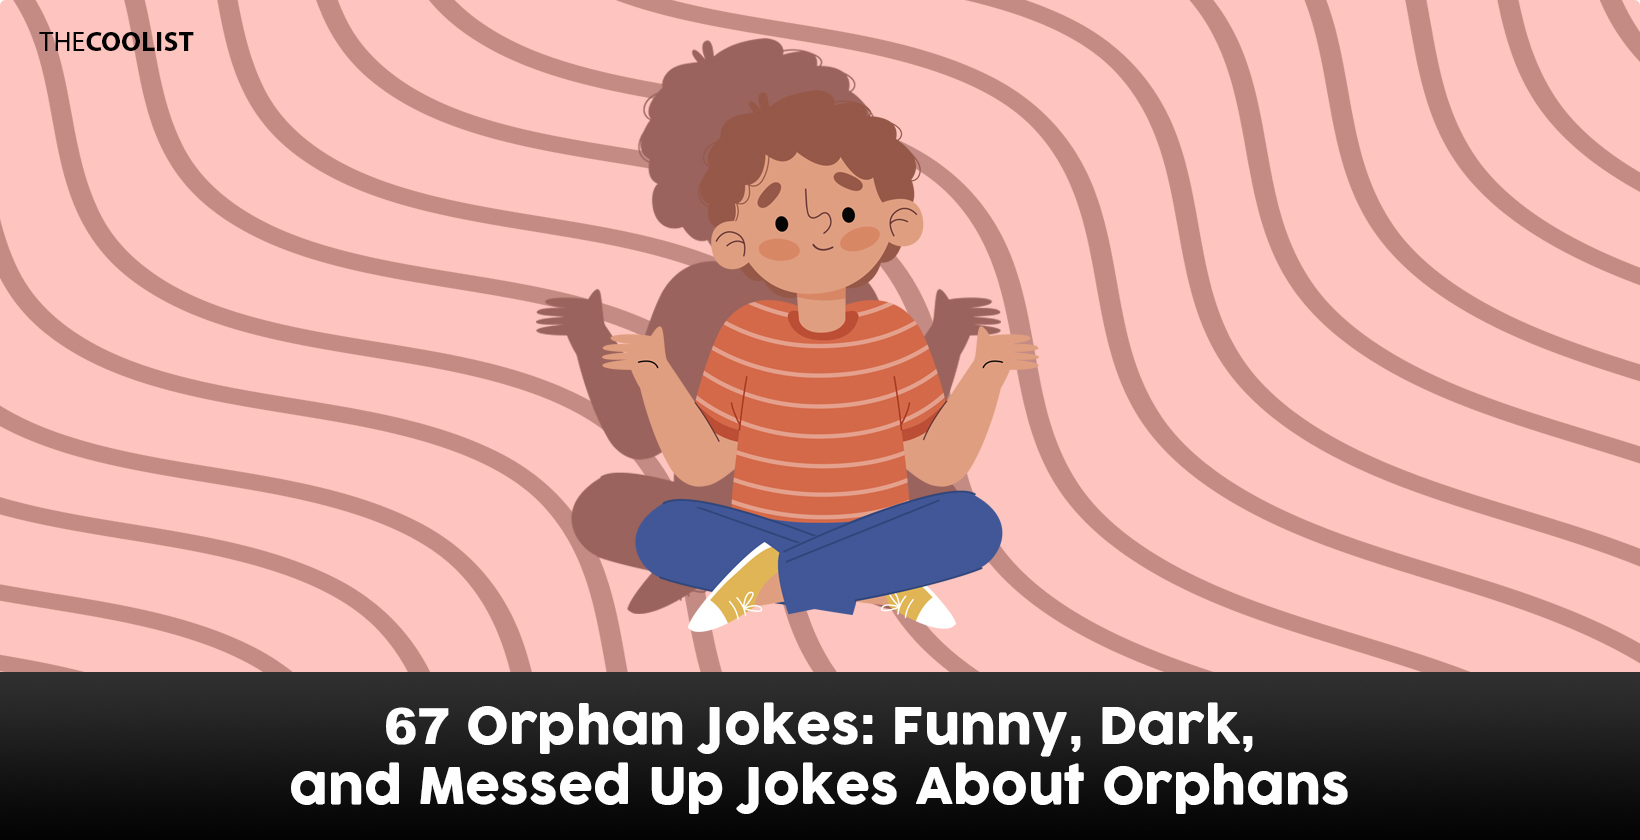 Jokes about orphans